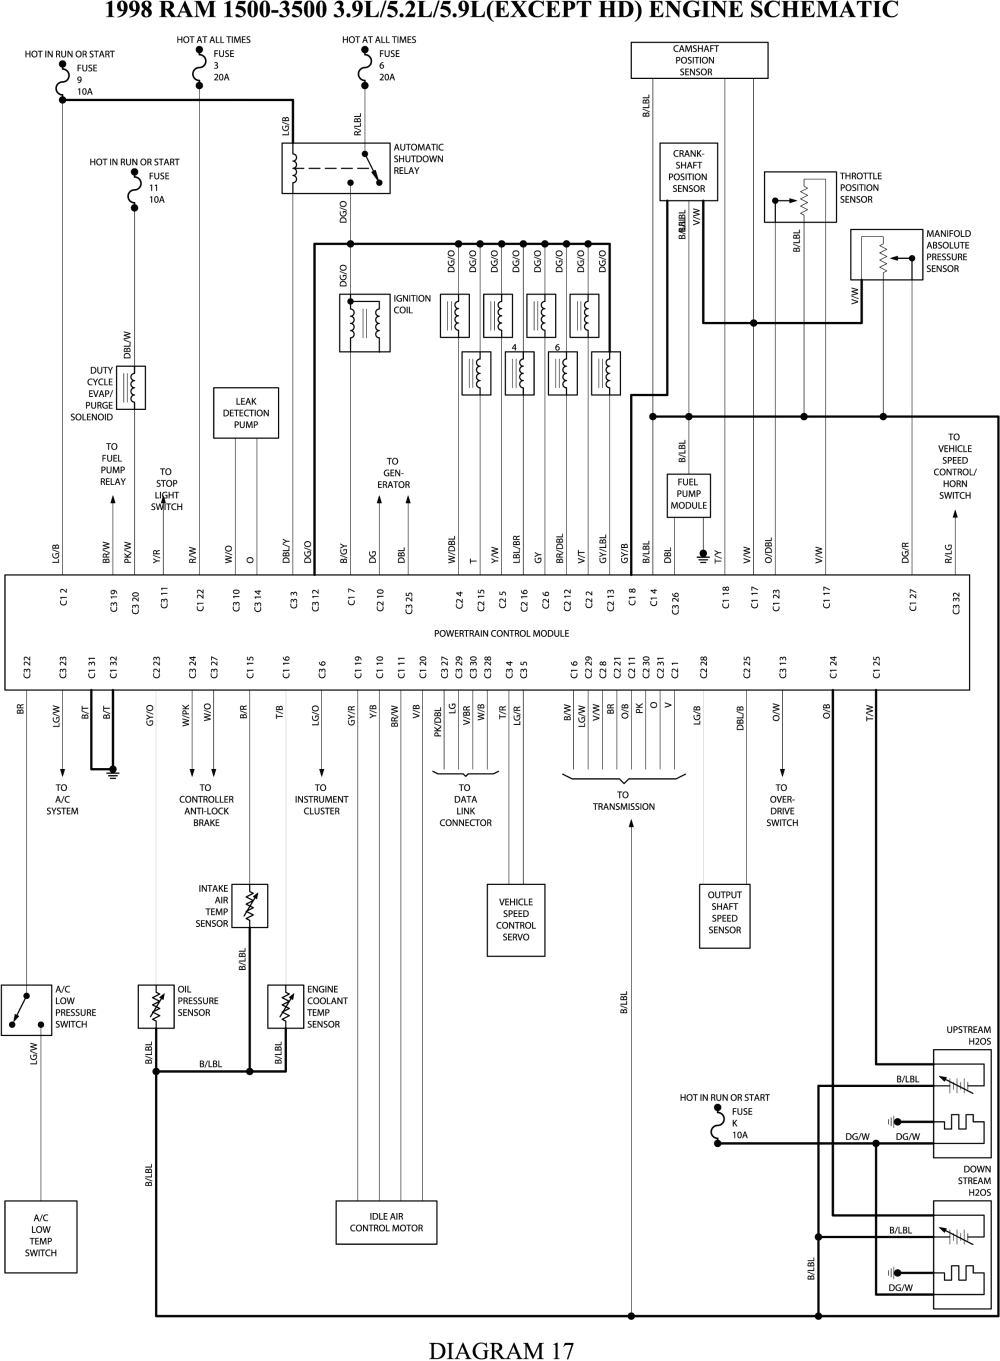 2000 dodge dakota wiring diagram - Wiring Diagram and Schematic 2000 Dodge Durango Tail Light Wiring Diagram